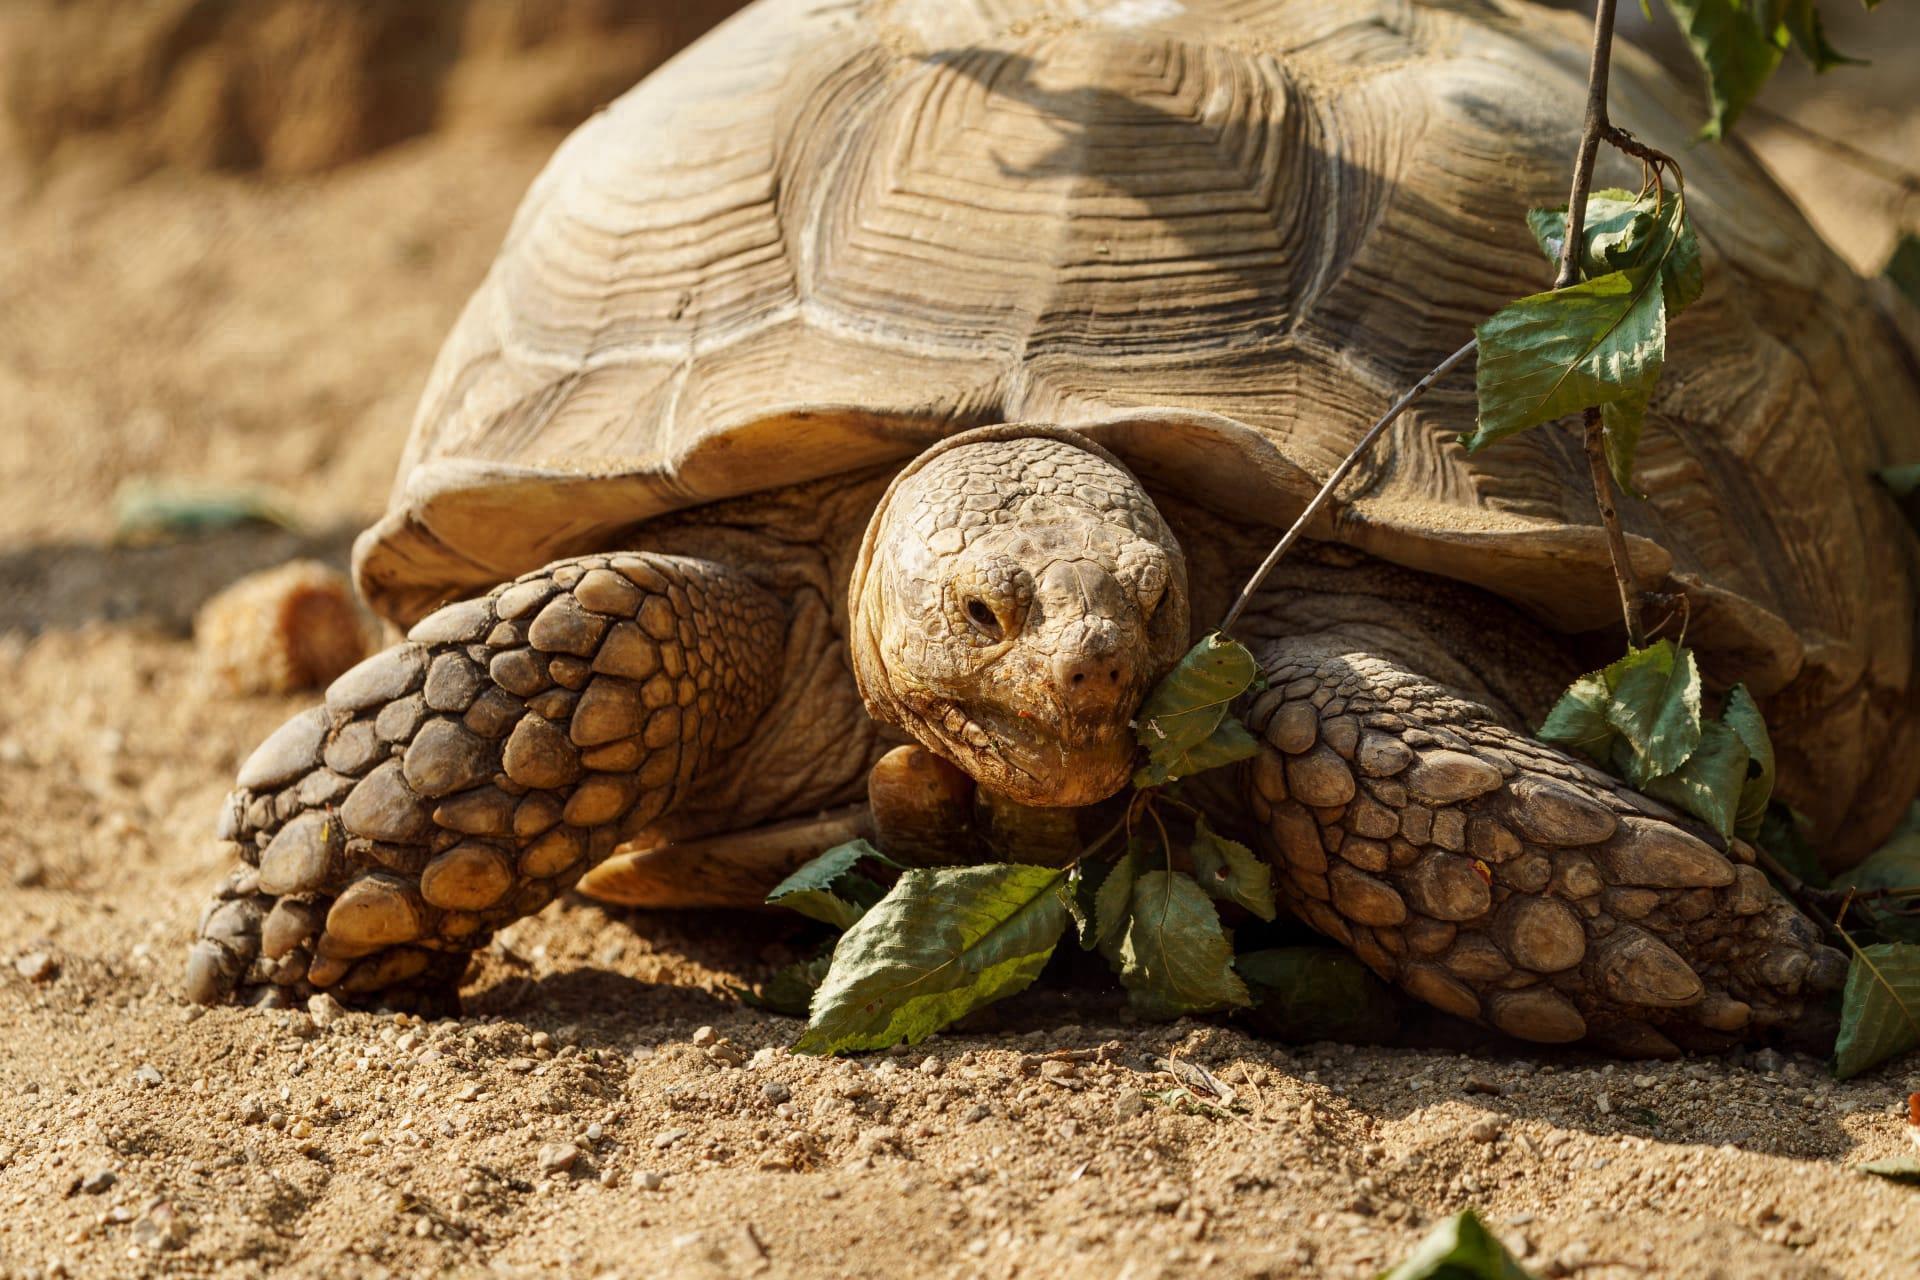 Western desert tortoise pictures